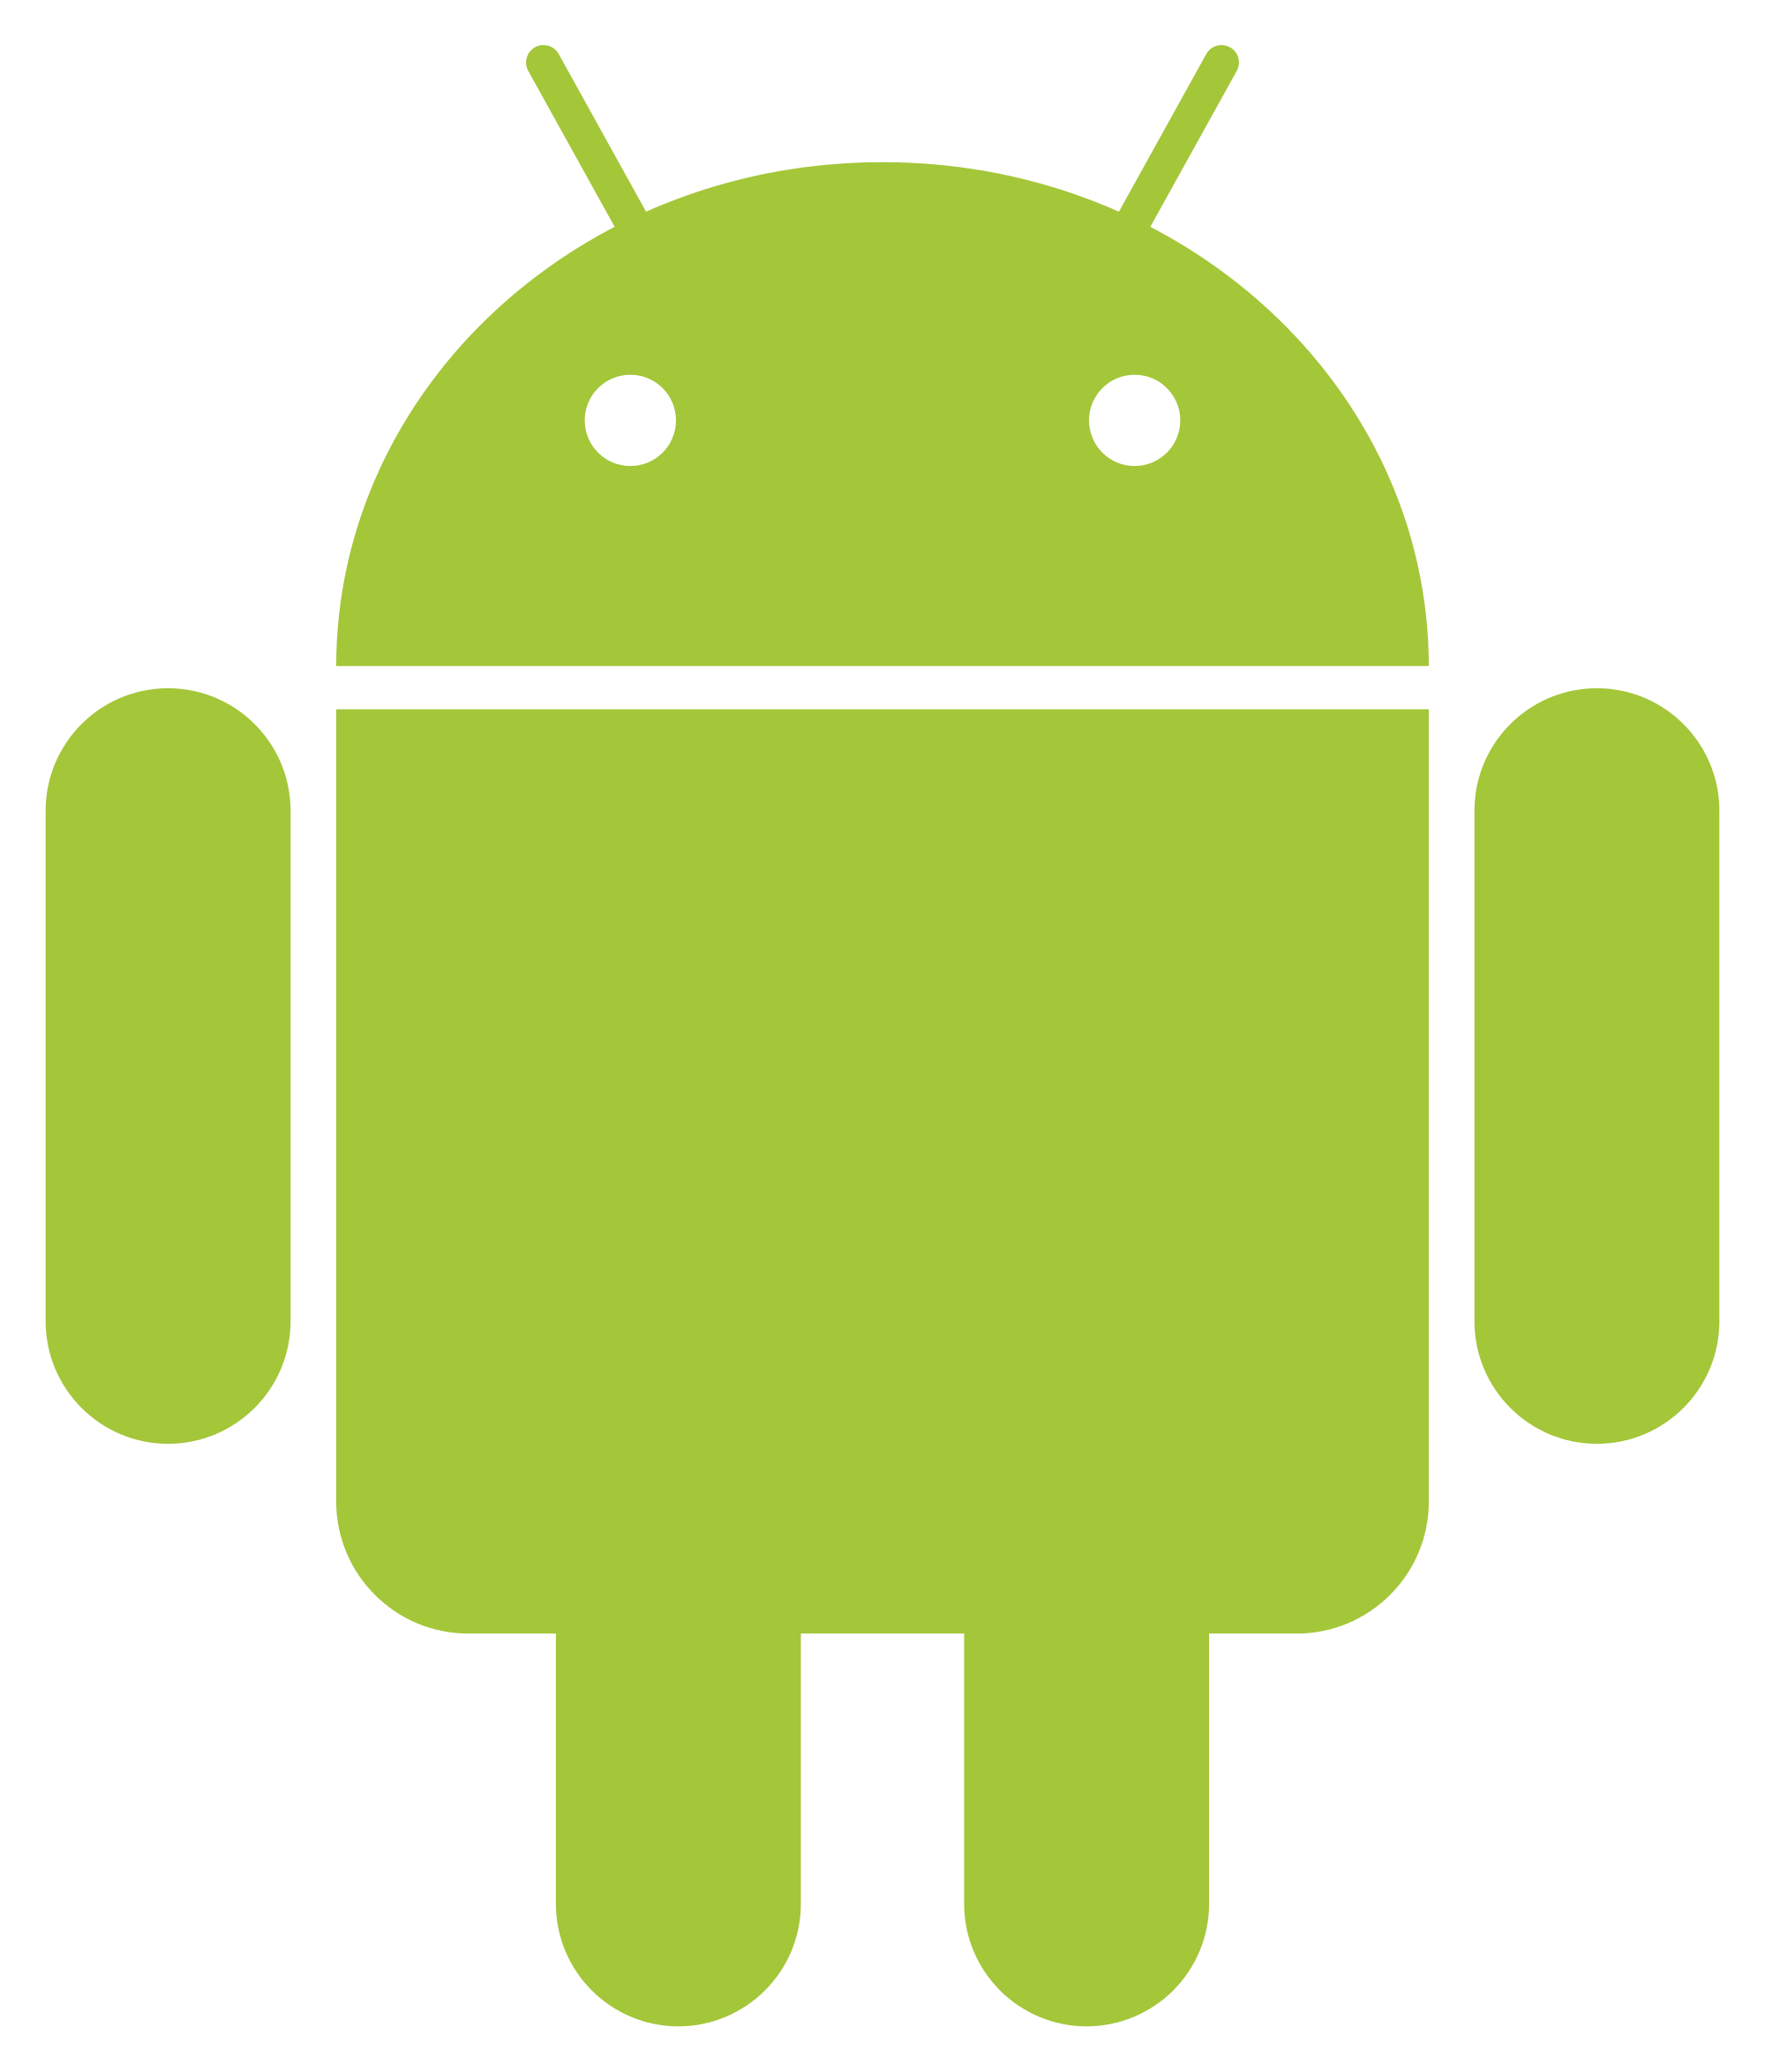 Android Robot gambar transparans